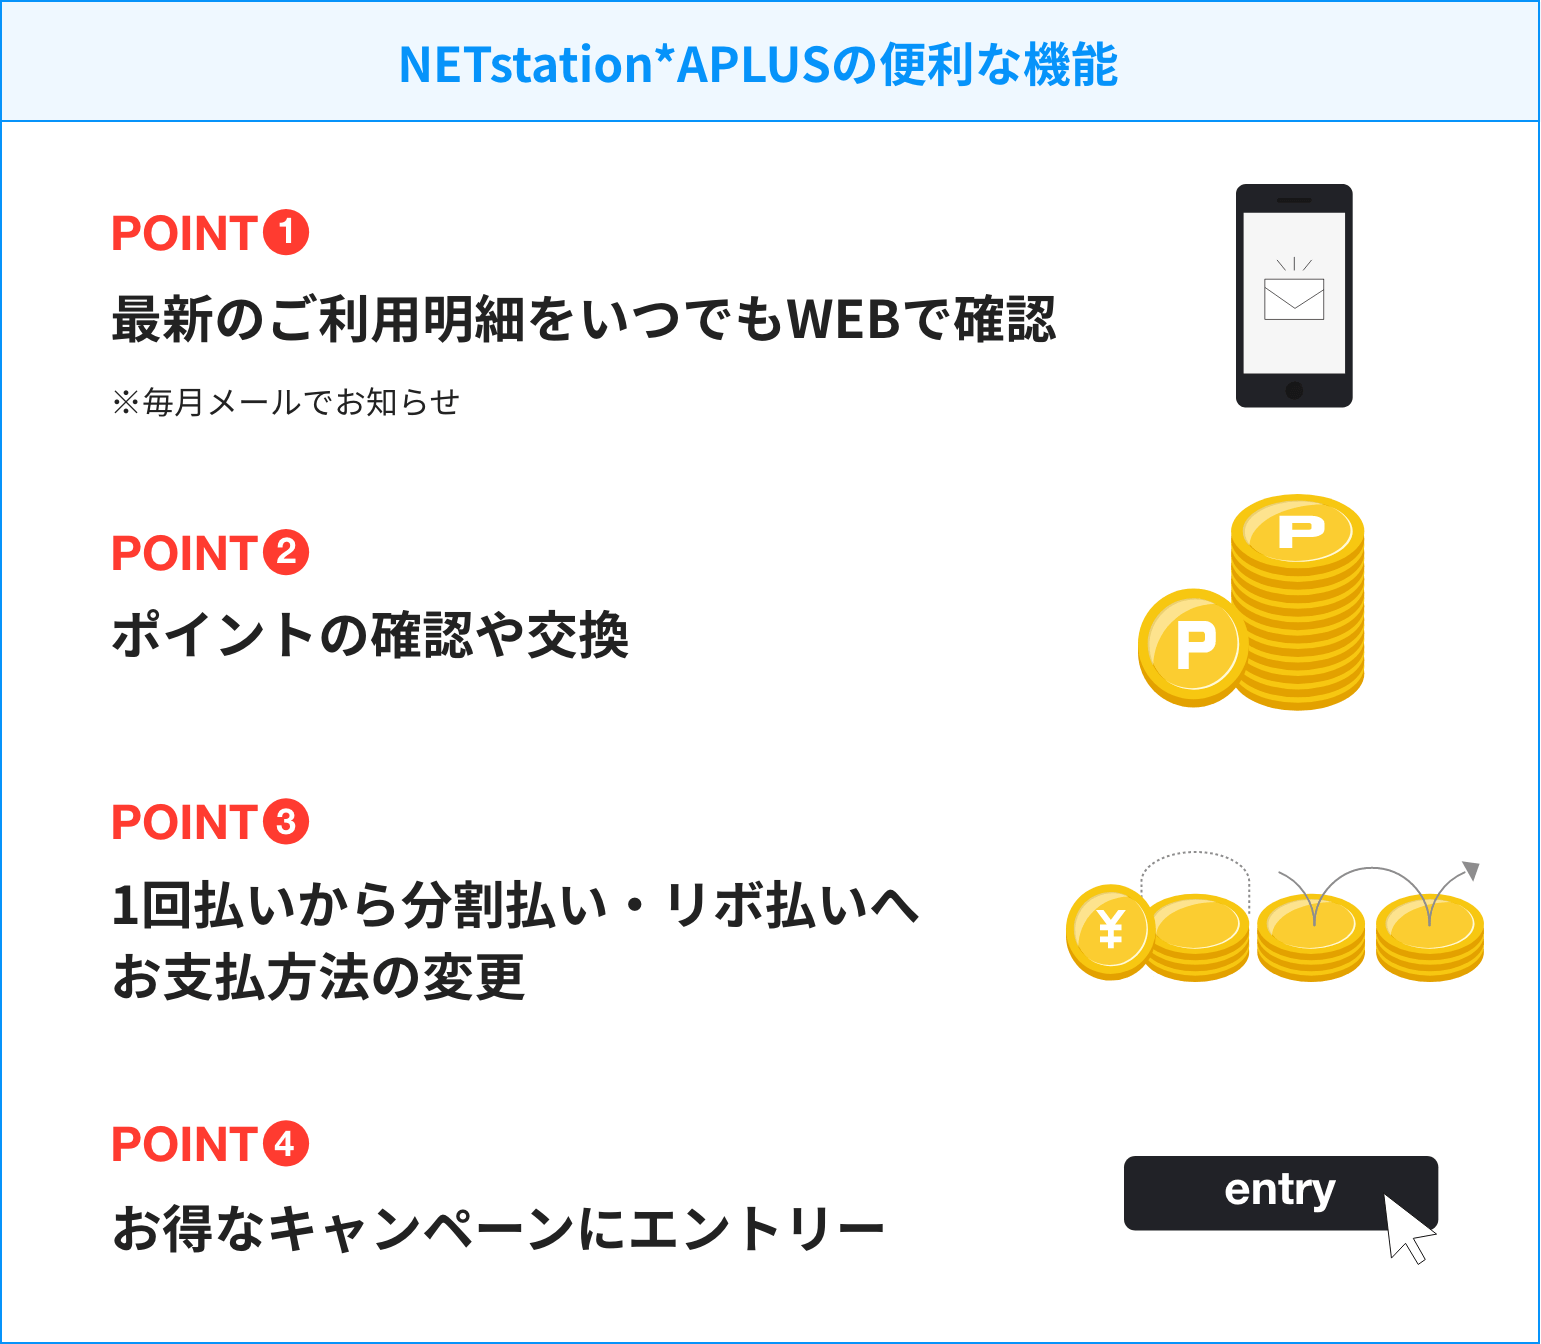 NETstation*APLUSの便利な機能